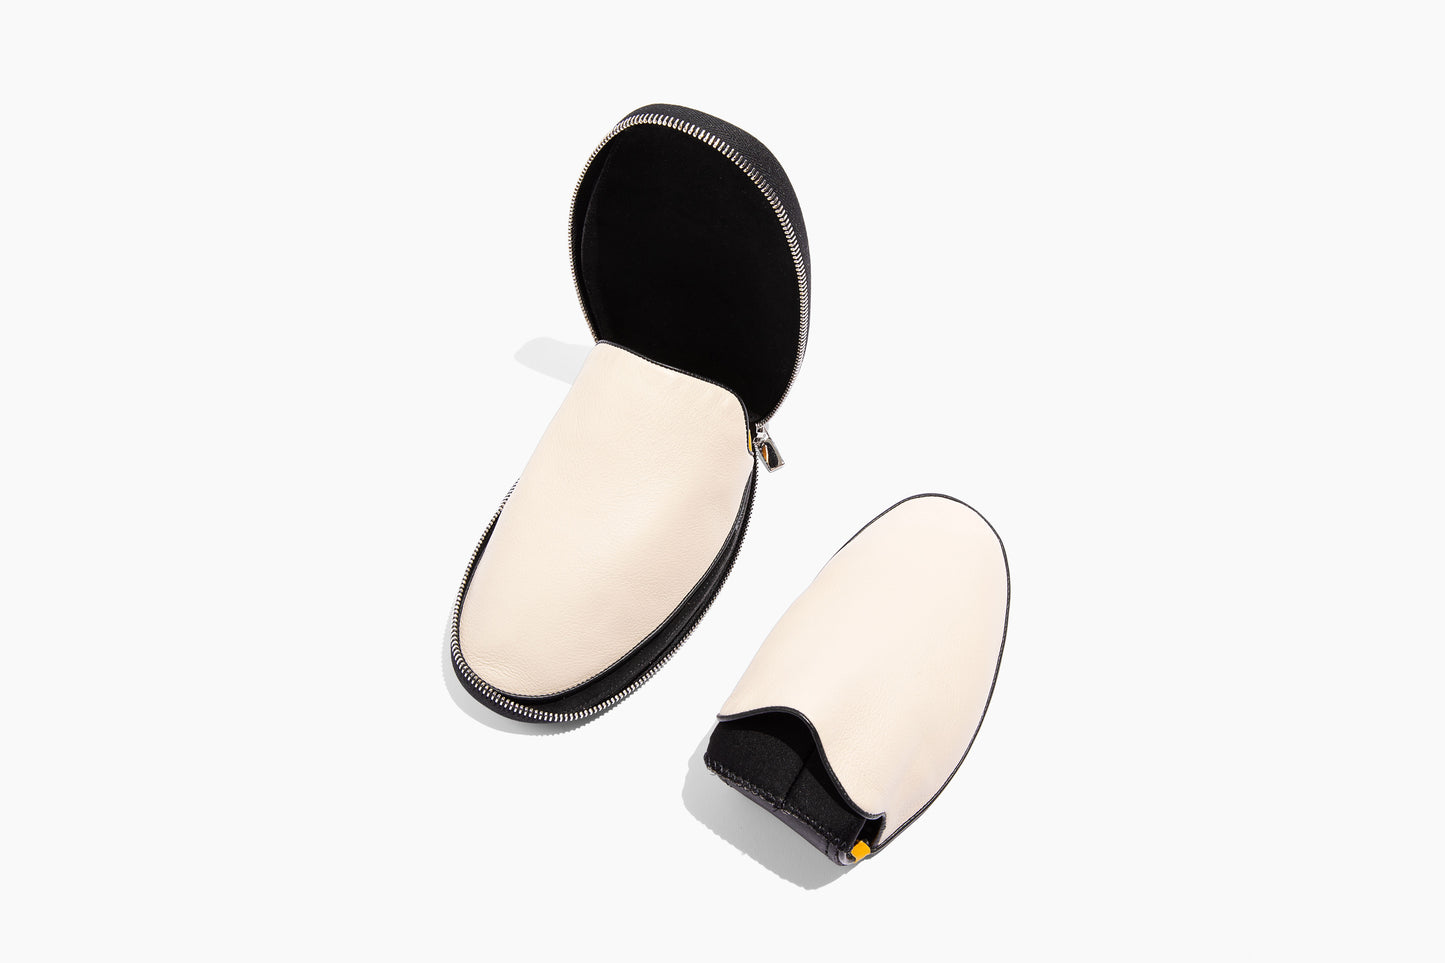 Luxury Cream leather. Foldable travel slipper. Handmade in Italy.